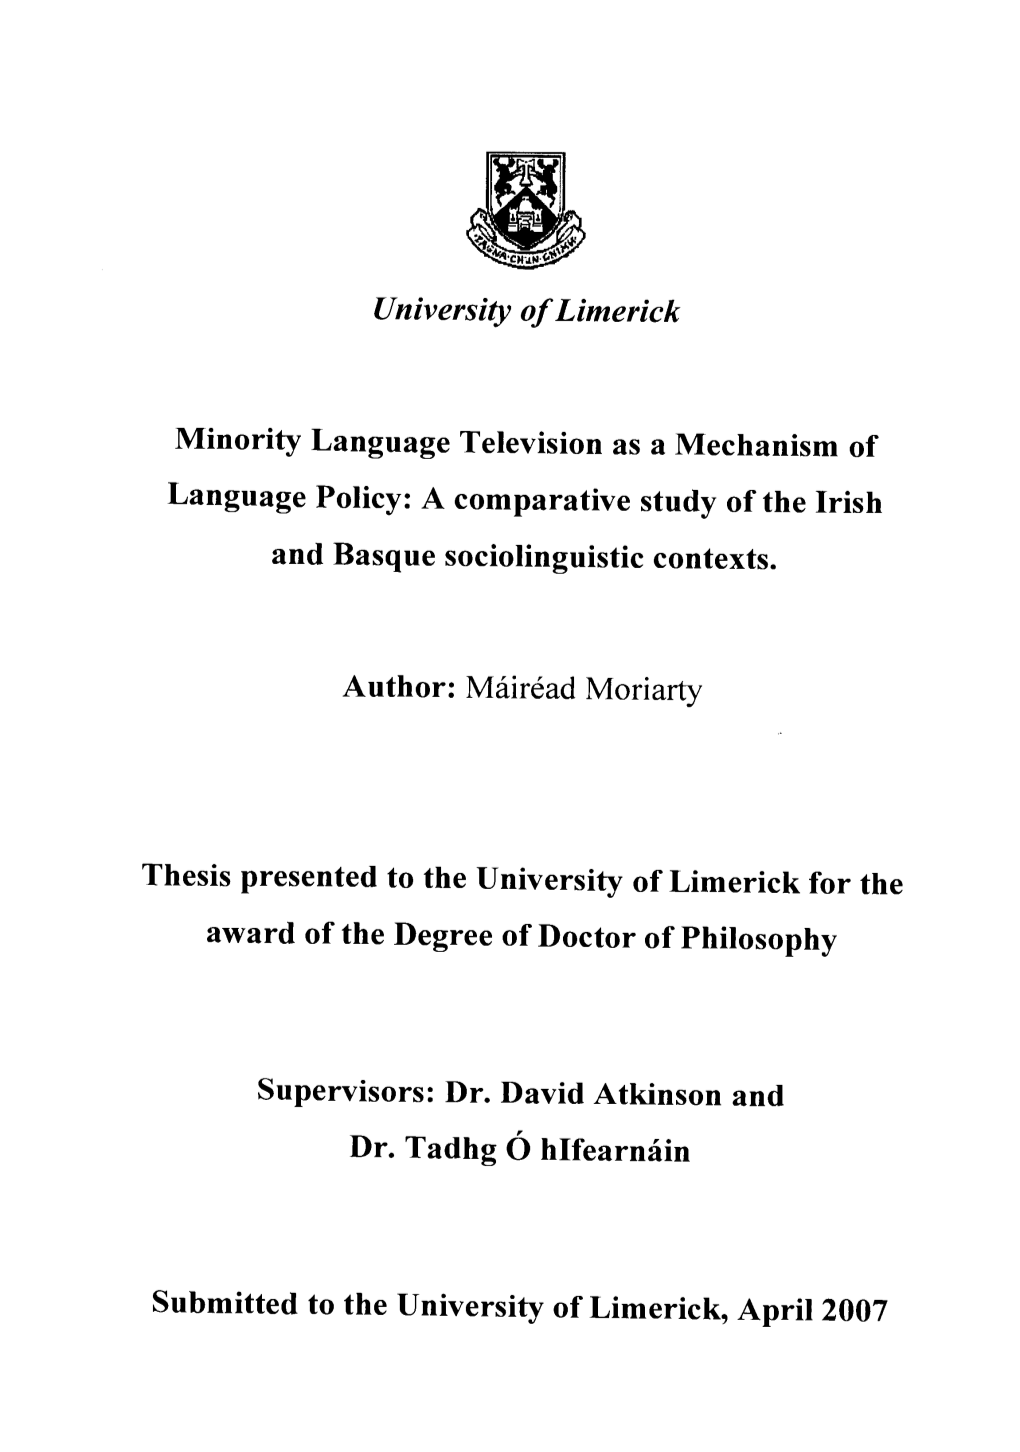 University of Limerick Minority Language Television As A